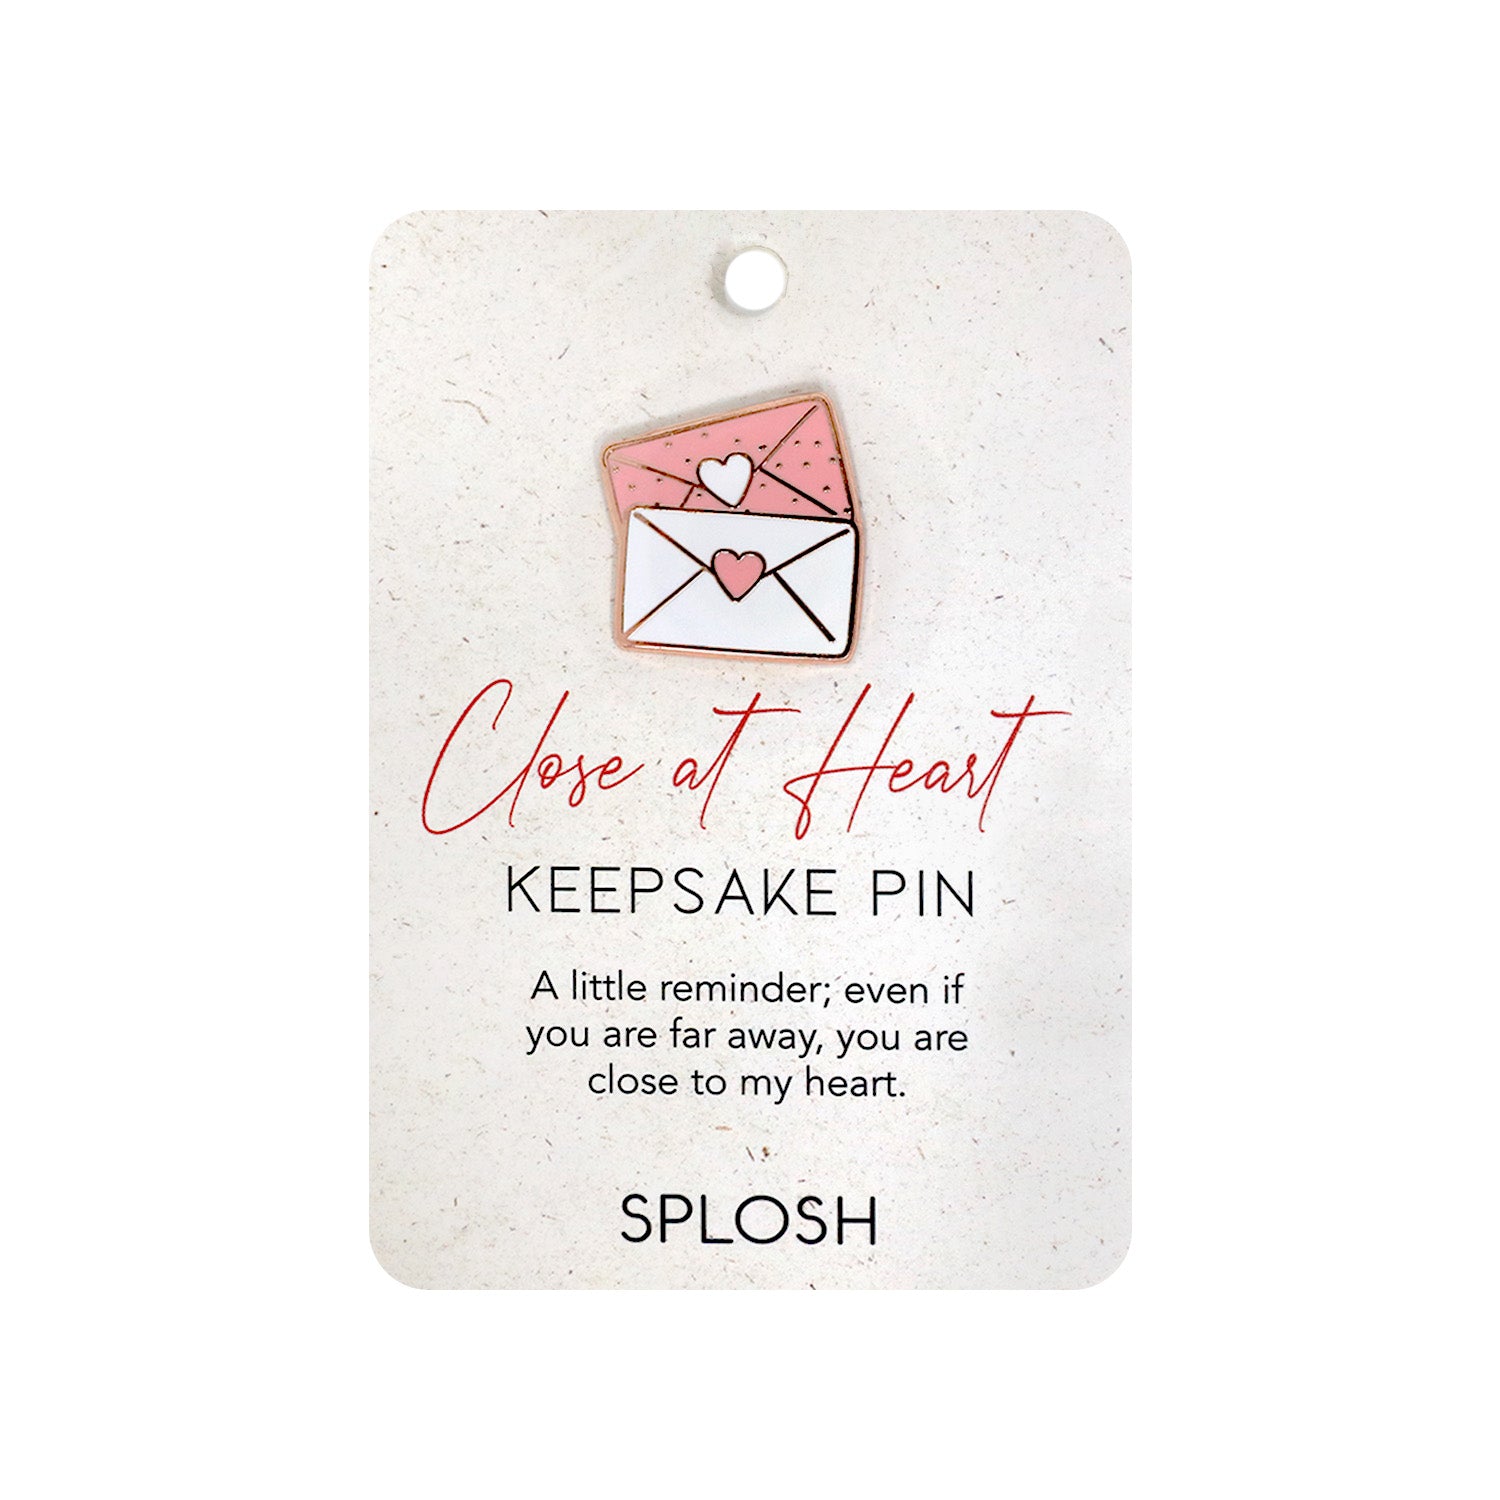 Splosh - Keepsake Pin - Close At Heart